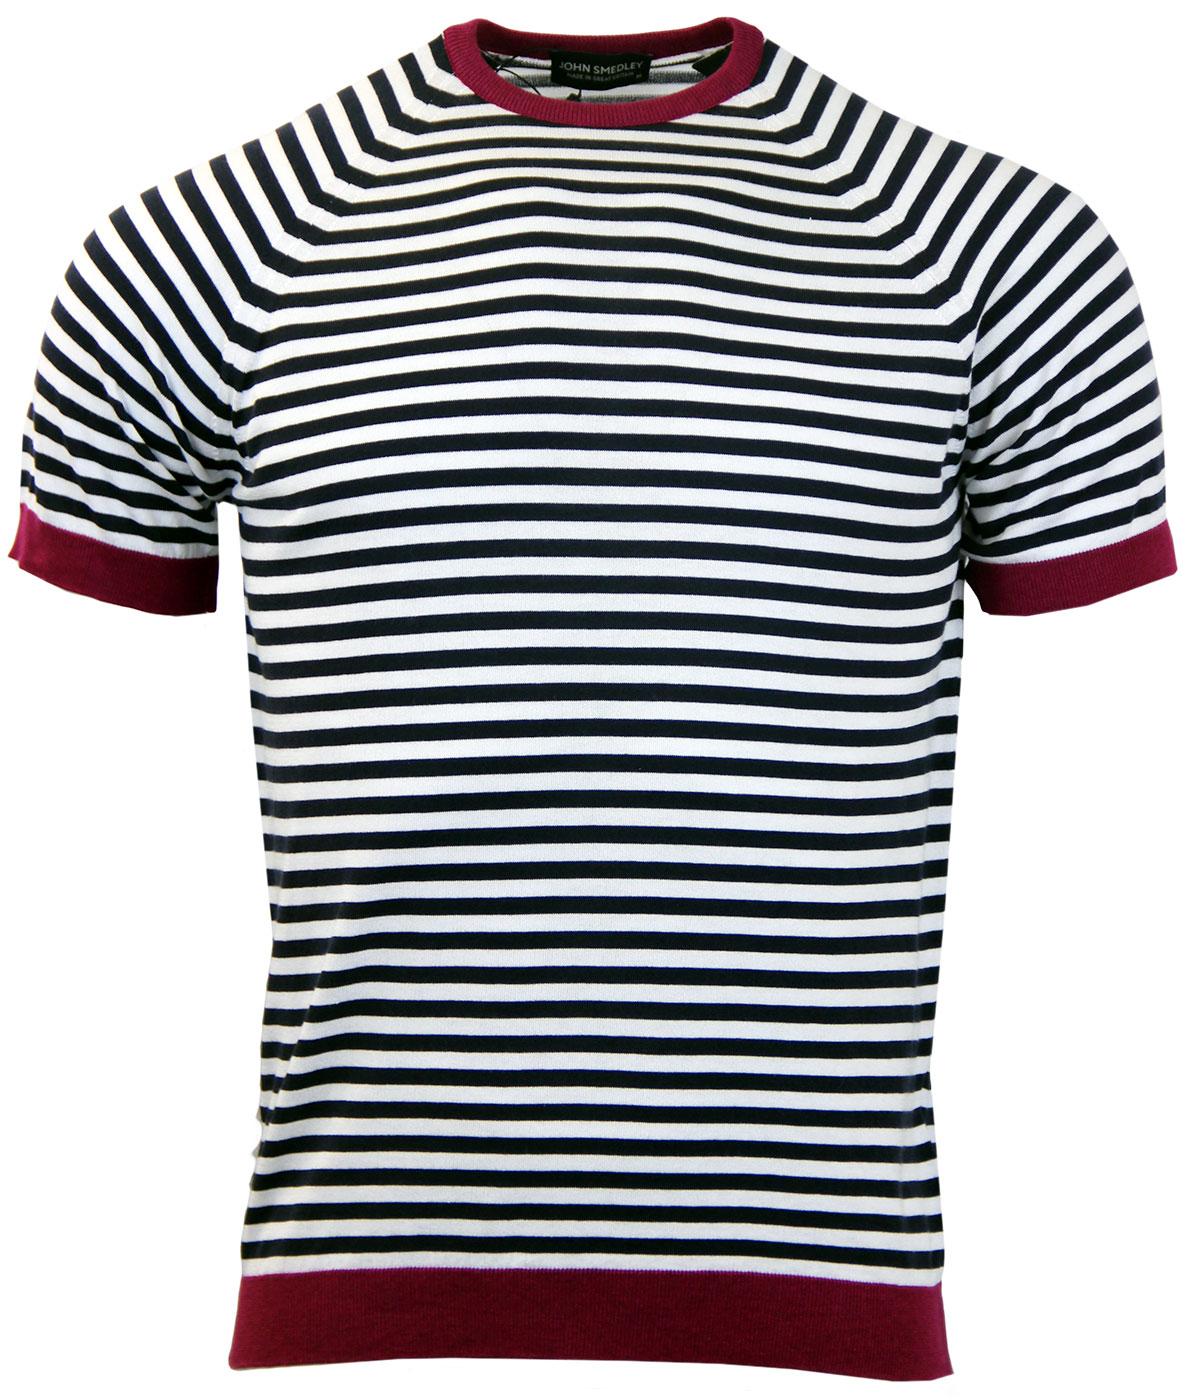 Eddy JOHN SMEDLEY Retro Mod Stripe Knit T-shirt